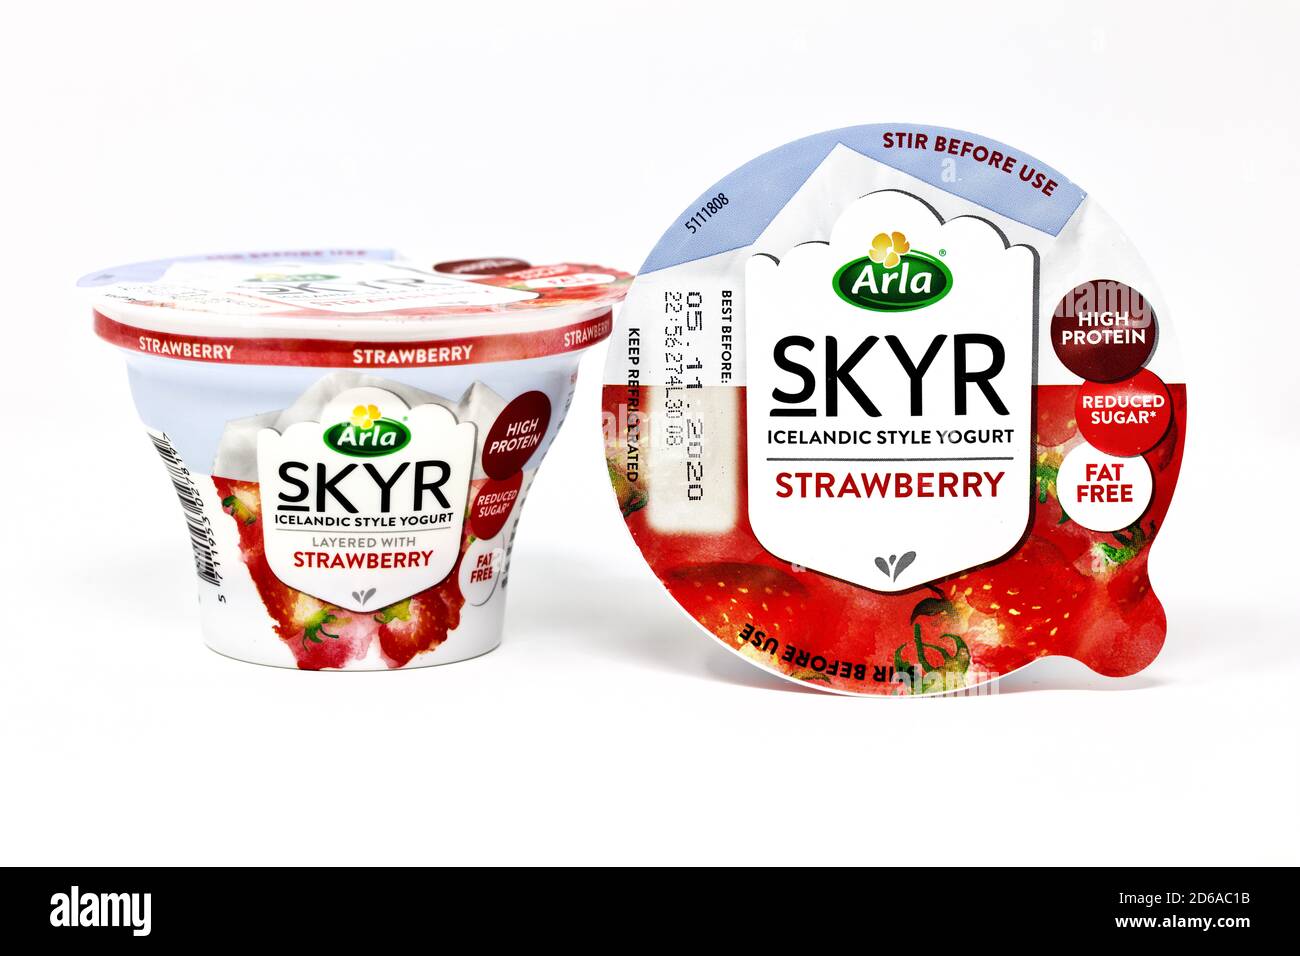 Arla Strawberry Stock Photo Yogurt Alamy Skyr -